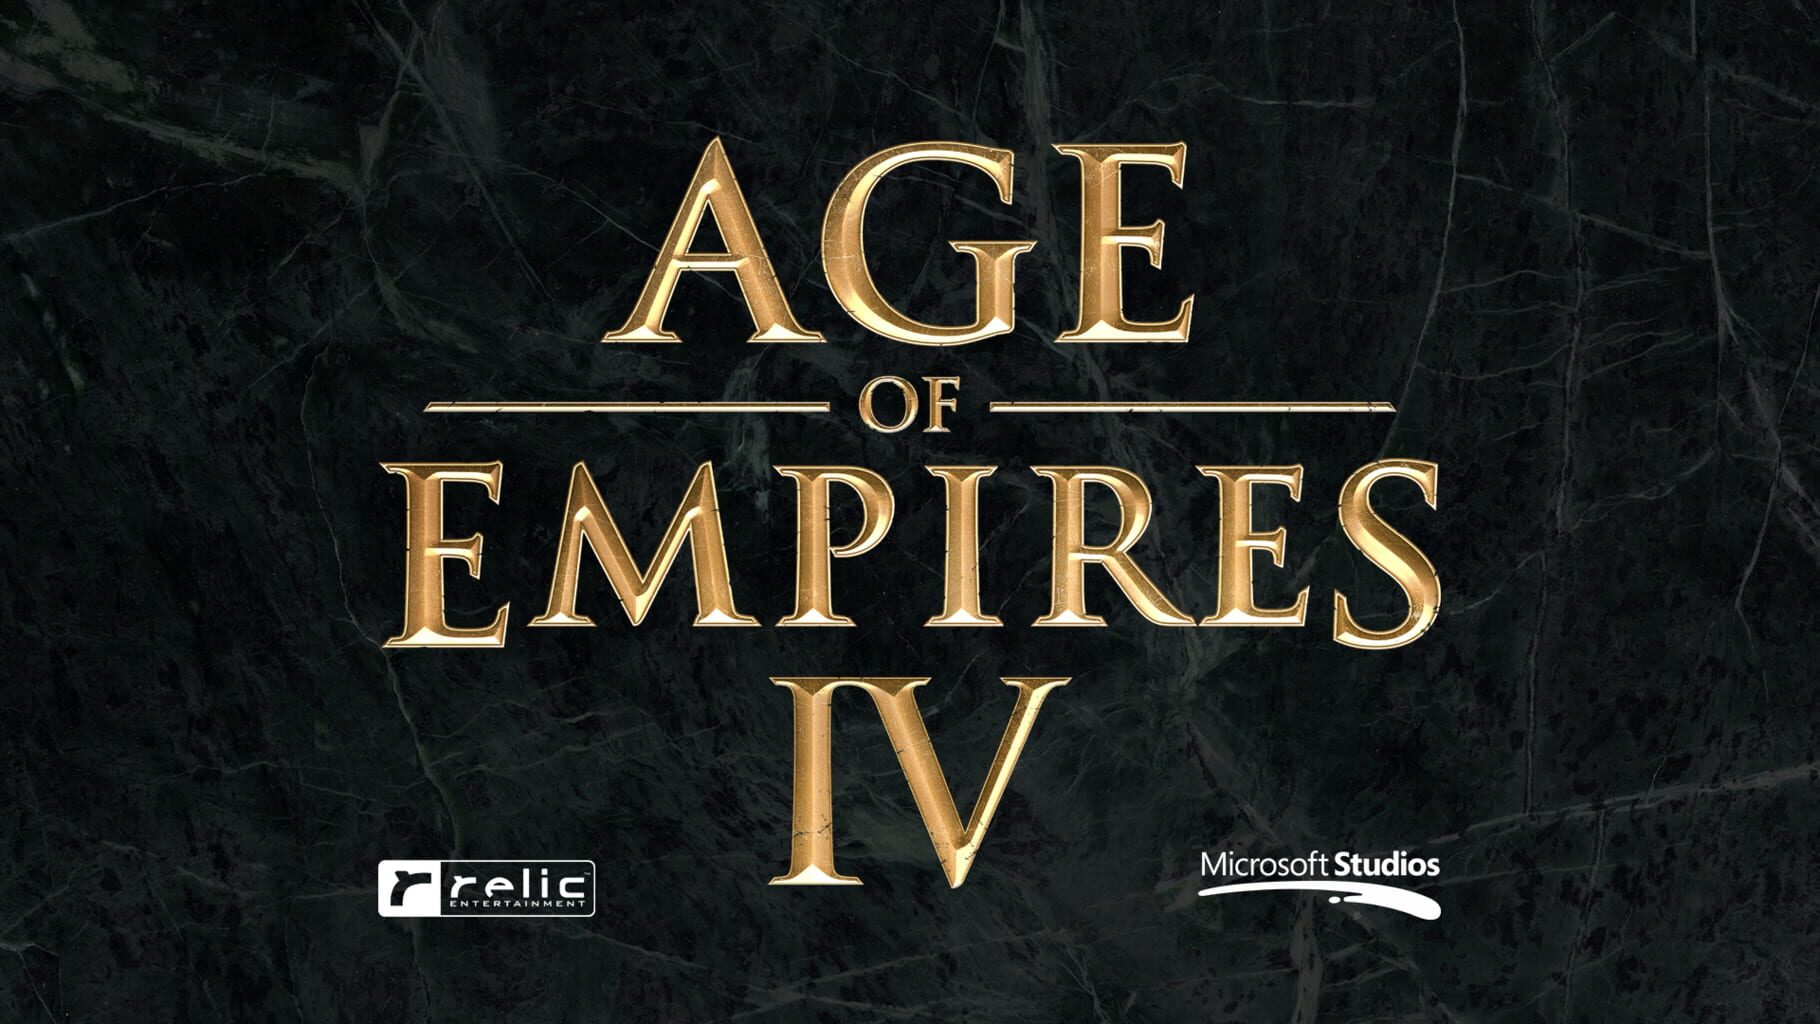 Arte - Age of Empires IV